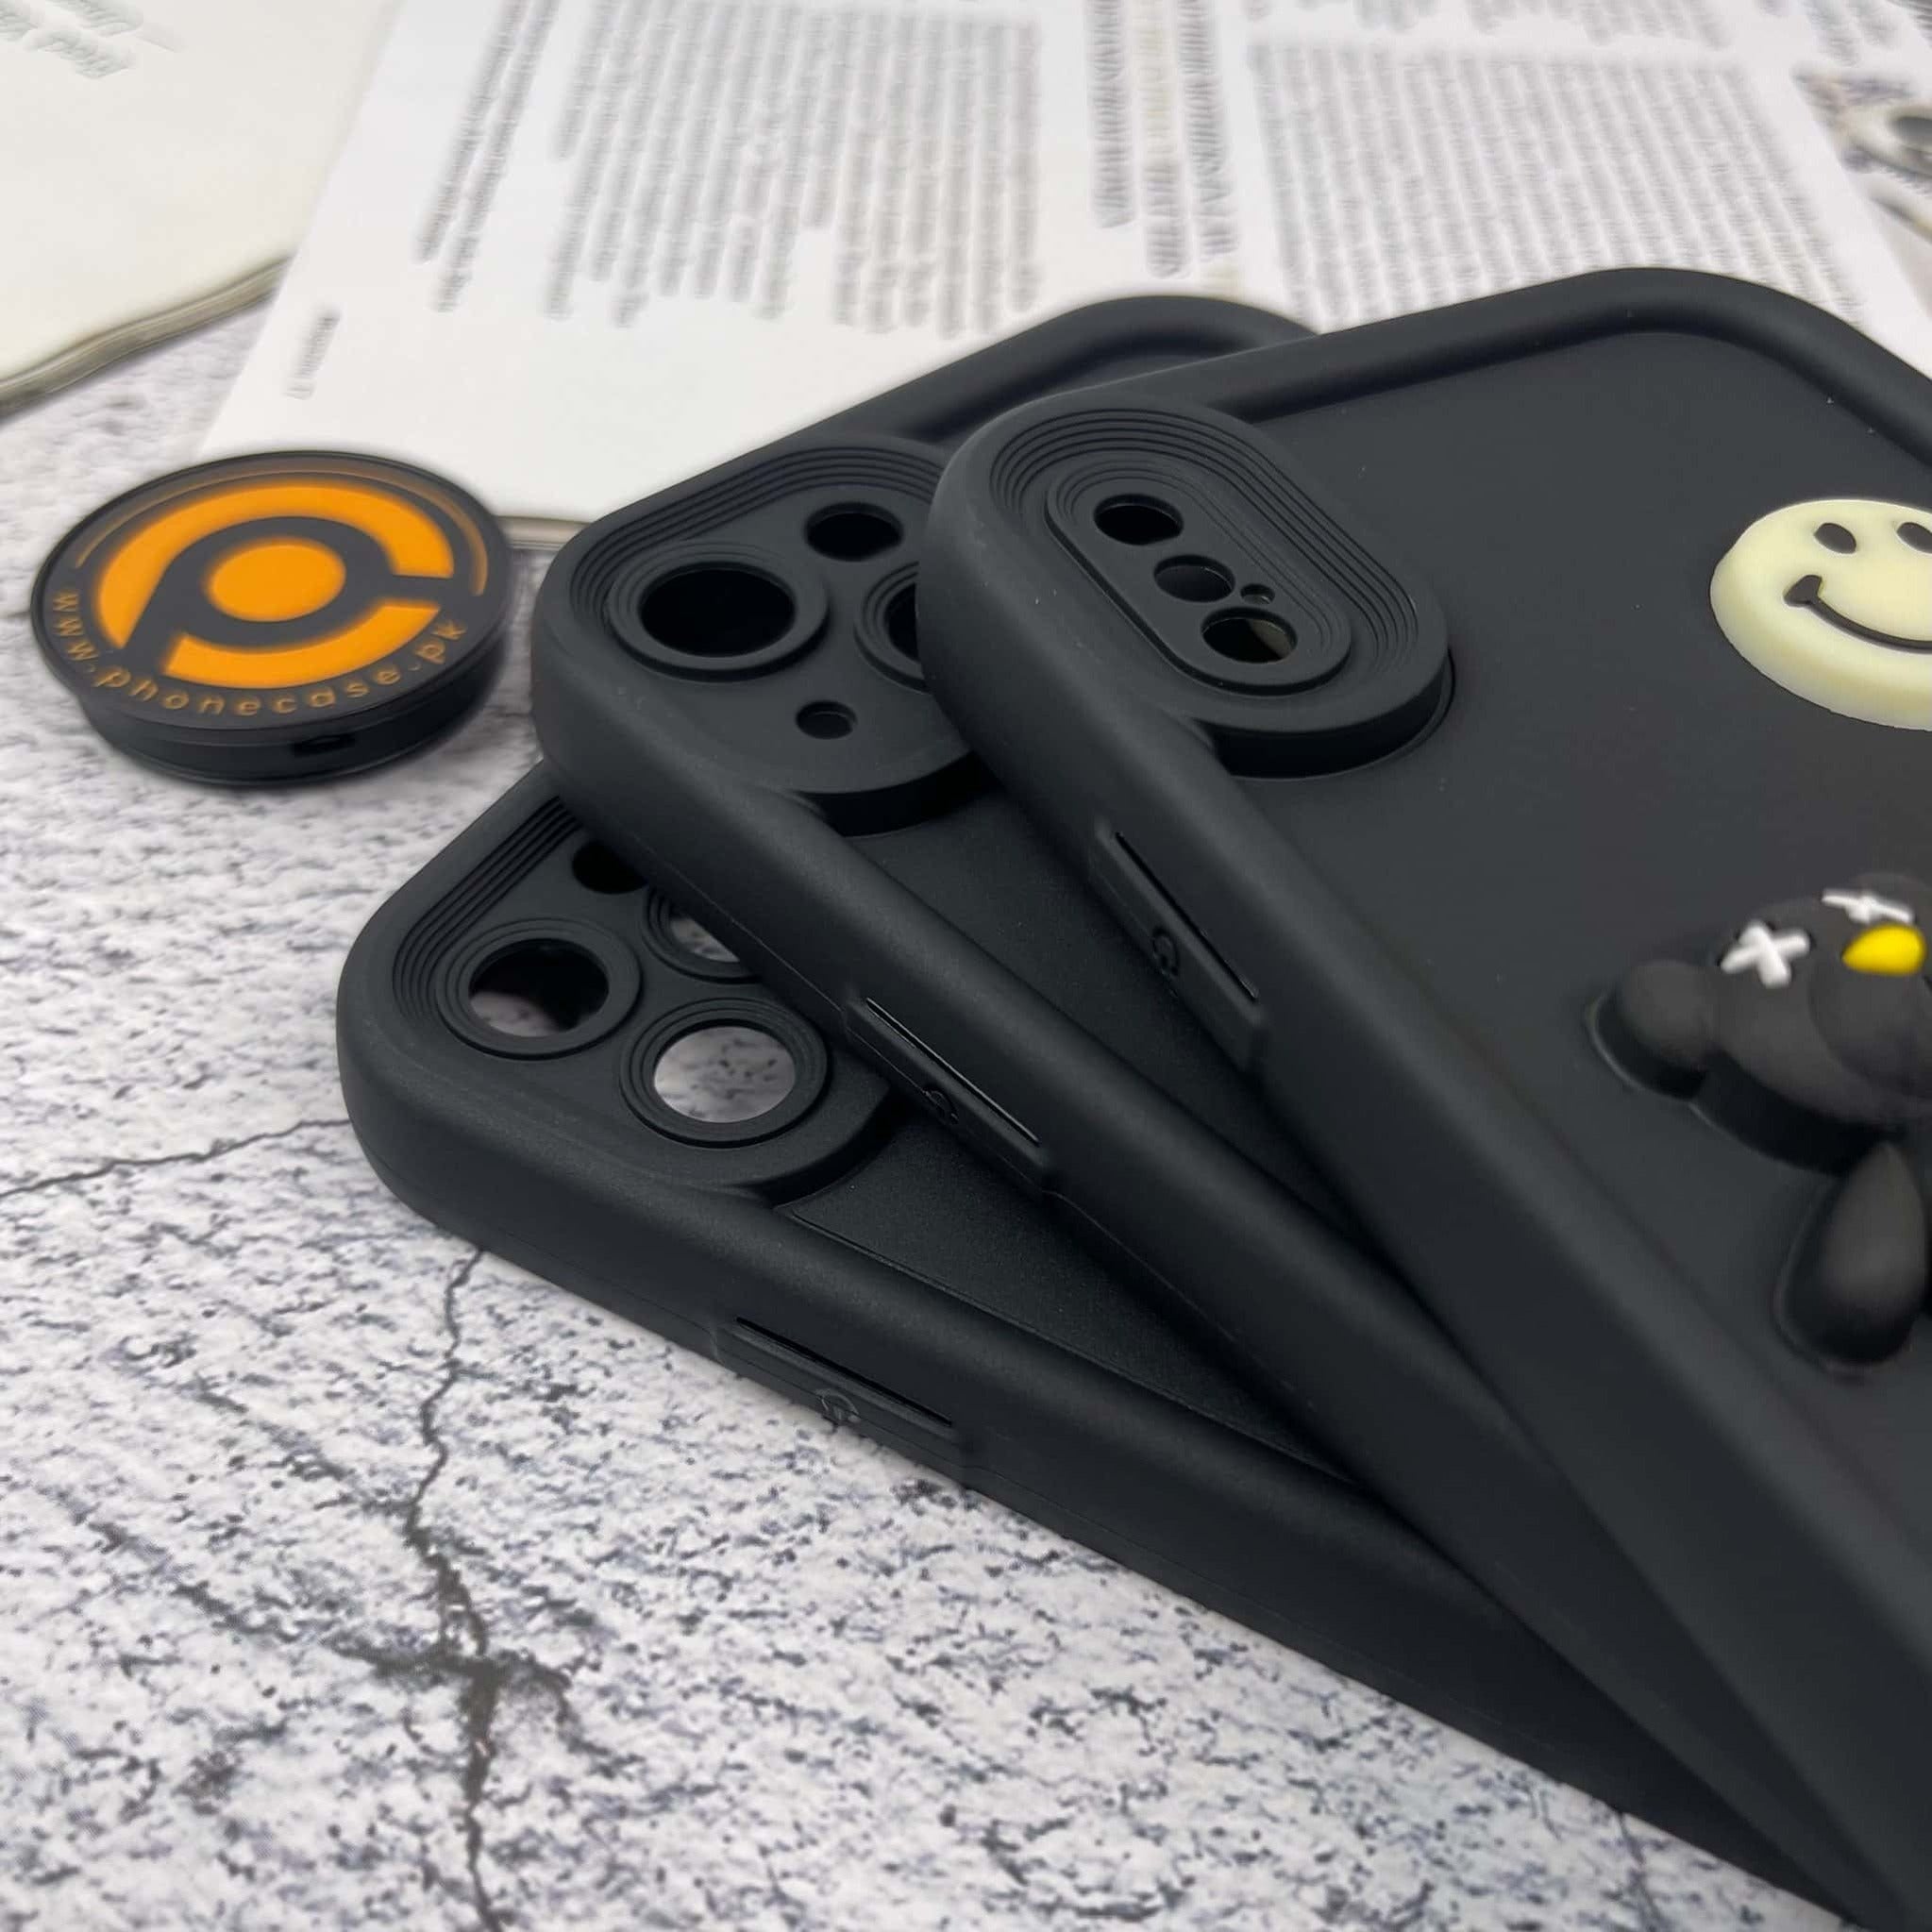 iPhone 12 Pro Cute 3D Black Bear Icons Liquid Silicon Case